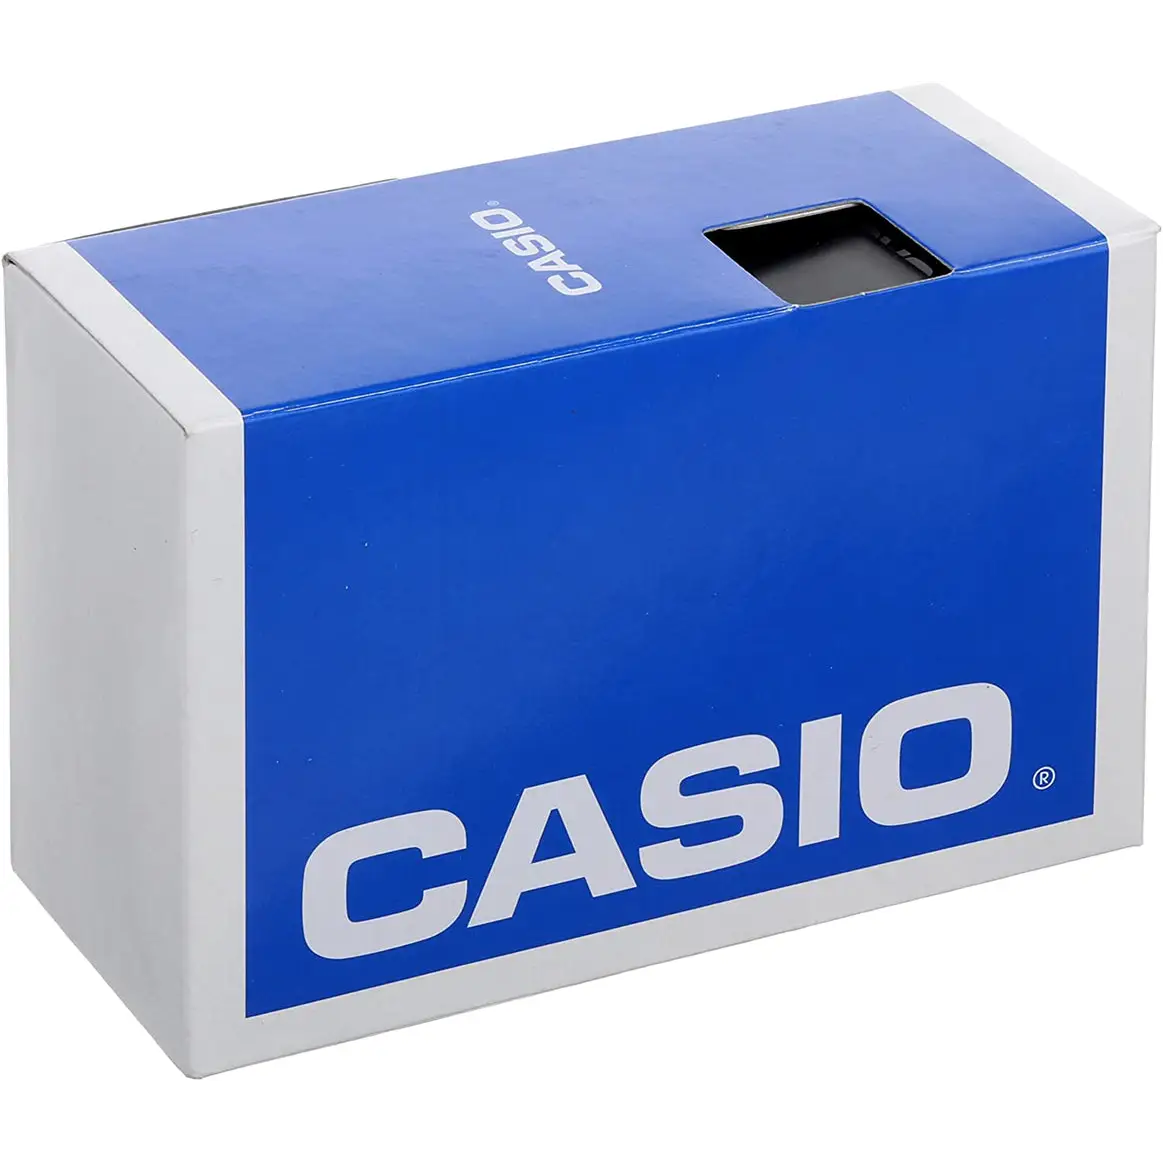 Casio Women’s Digital Quartz Stainless Steel/Black Resin